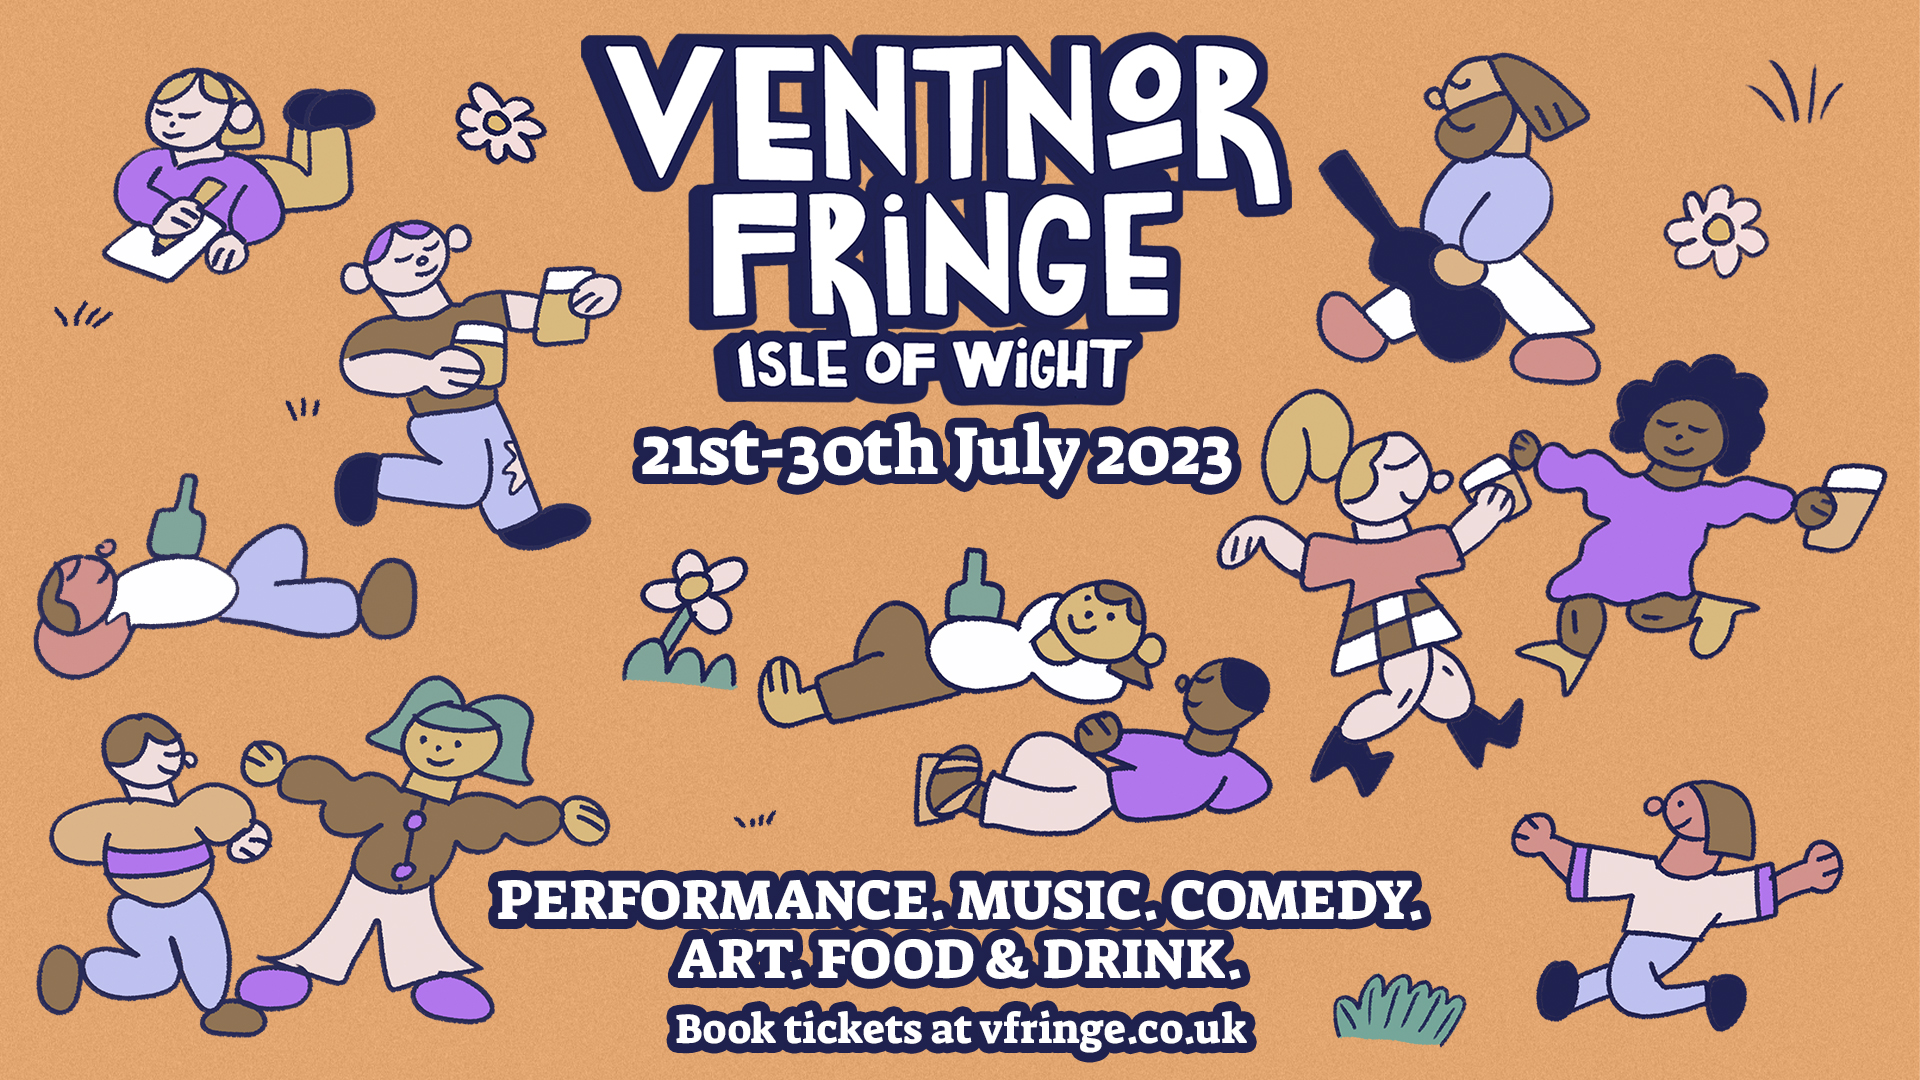 Ventnor Fringe Isle of Wight 